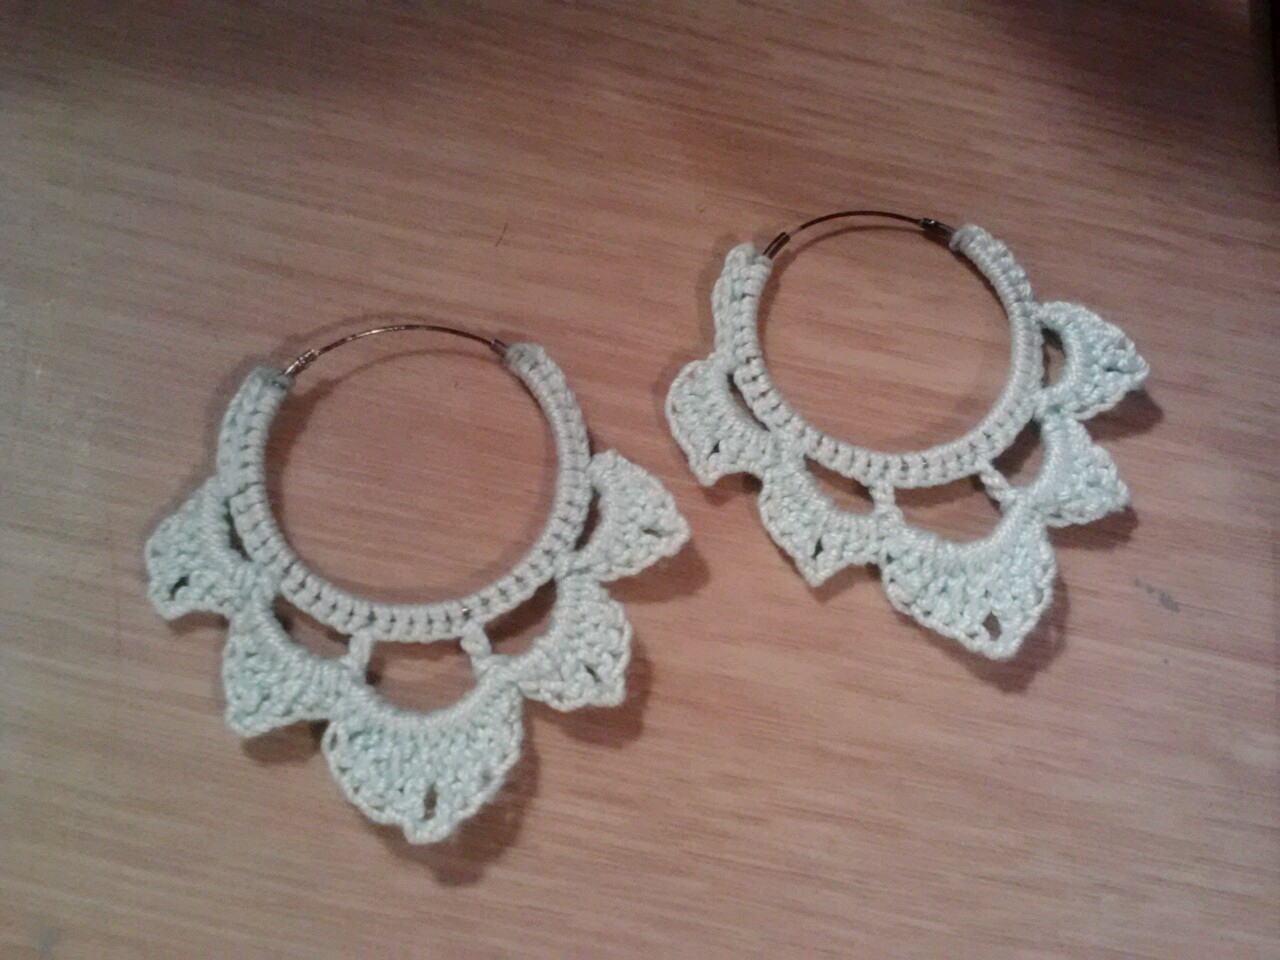 geekygears:  Crocheted hoop earrings! Should I add beads?  Gonna make some peach